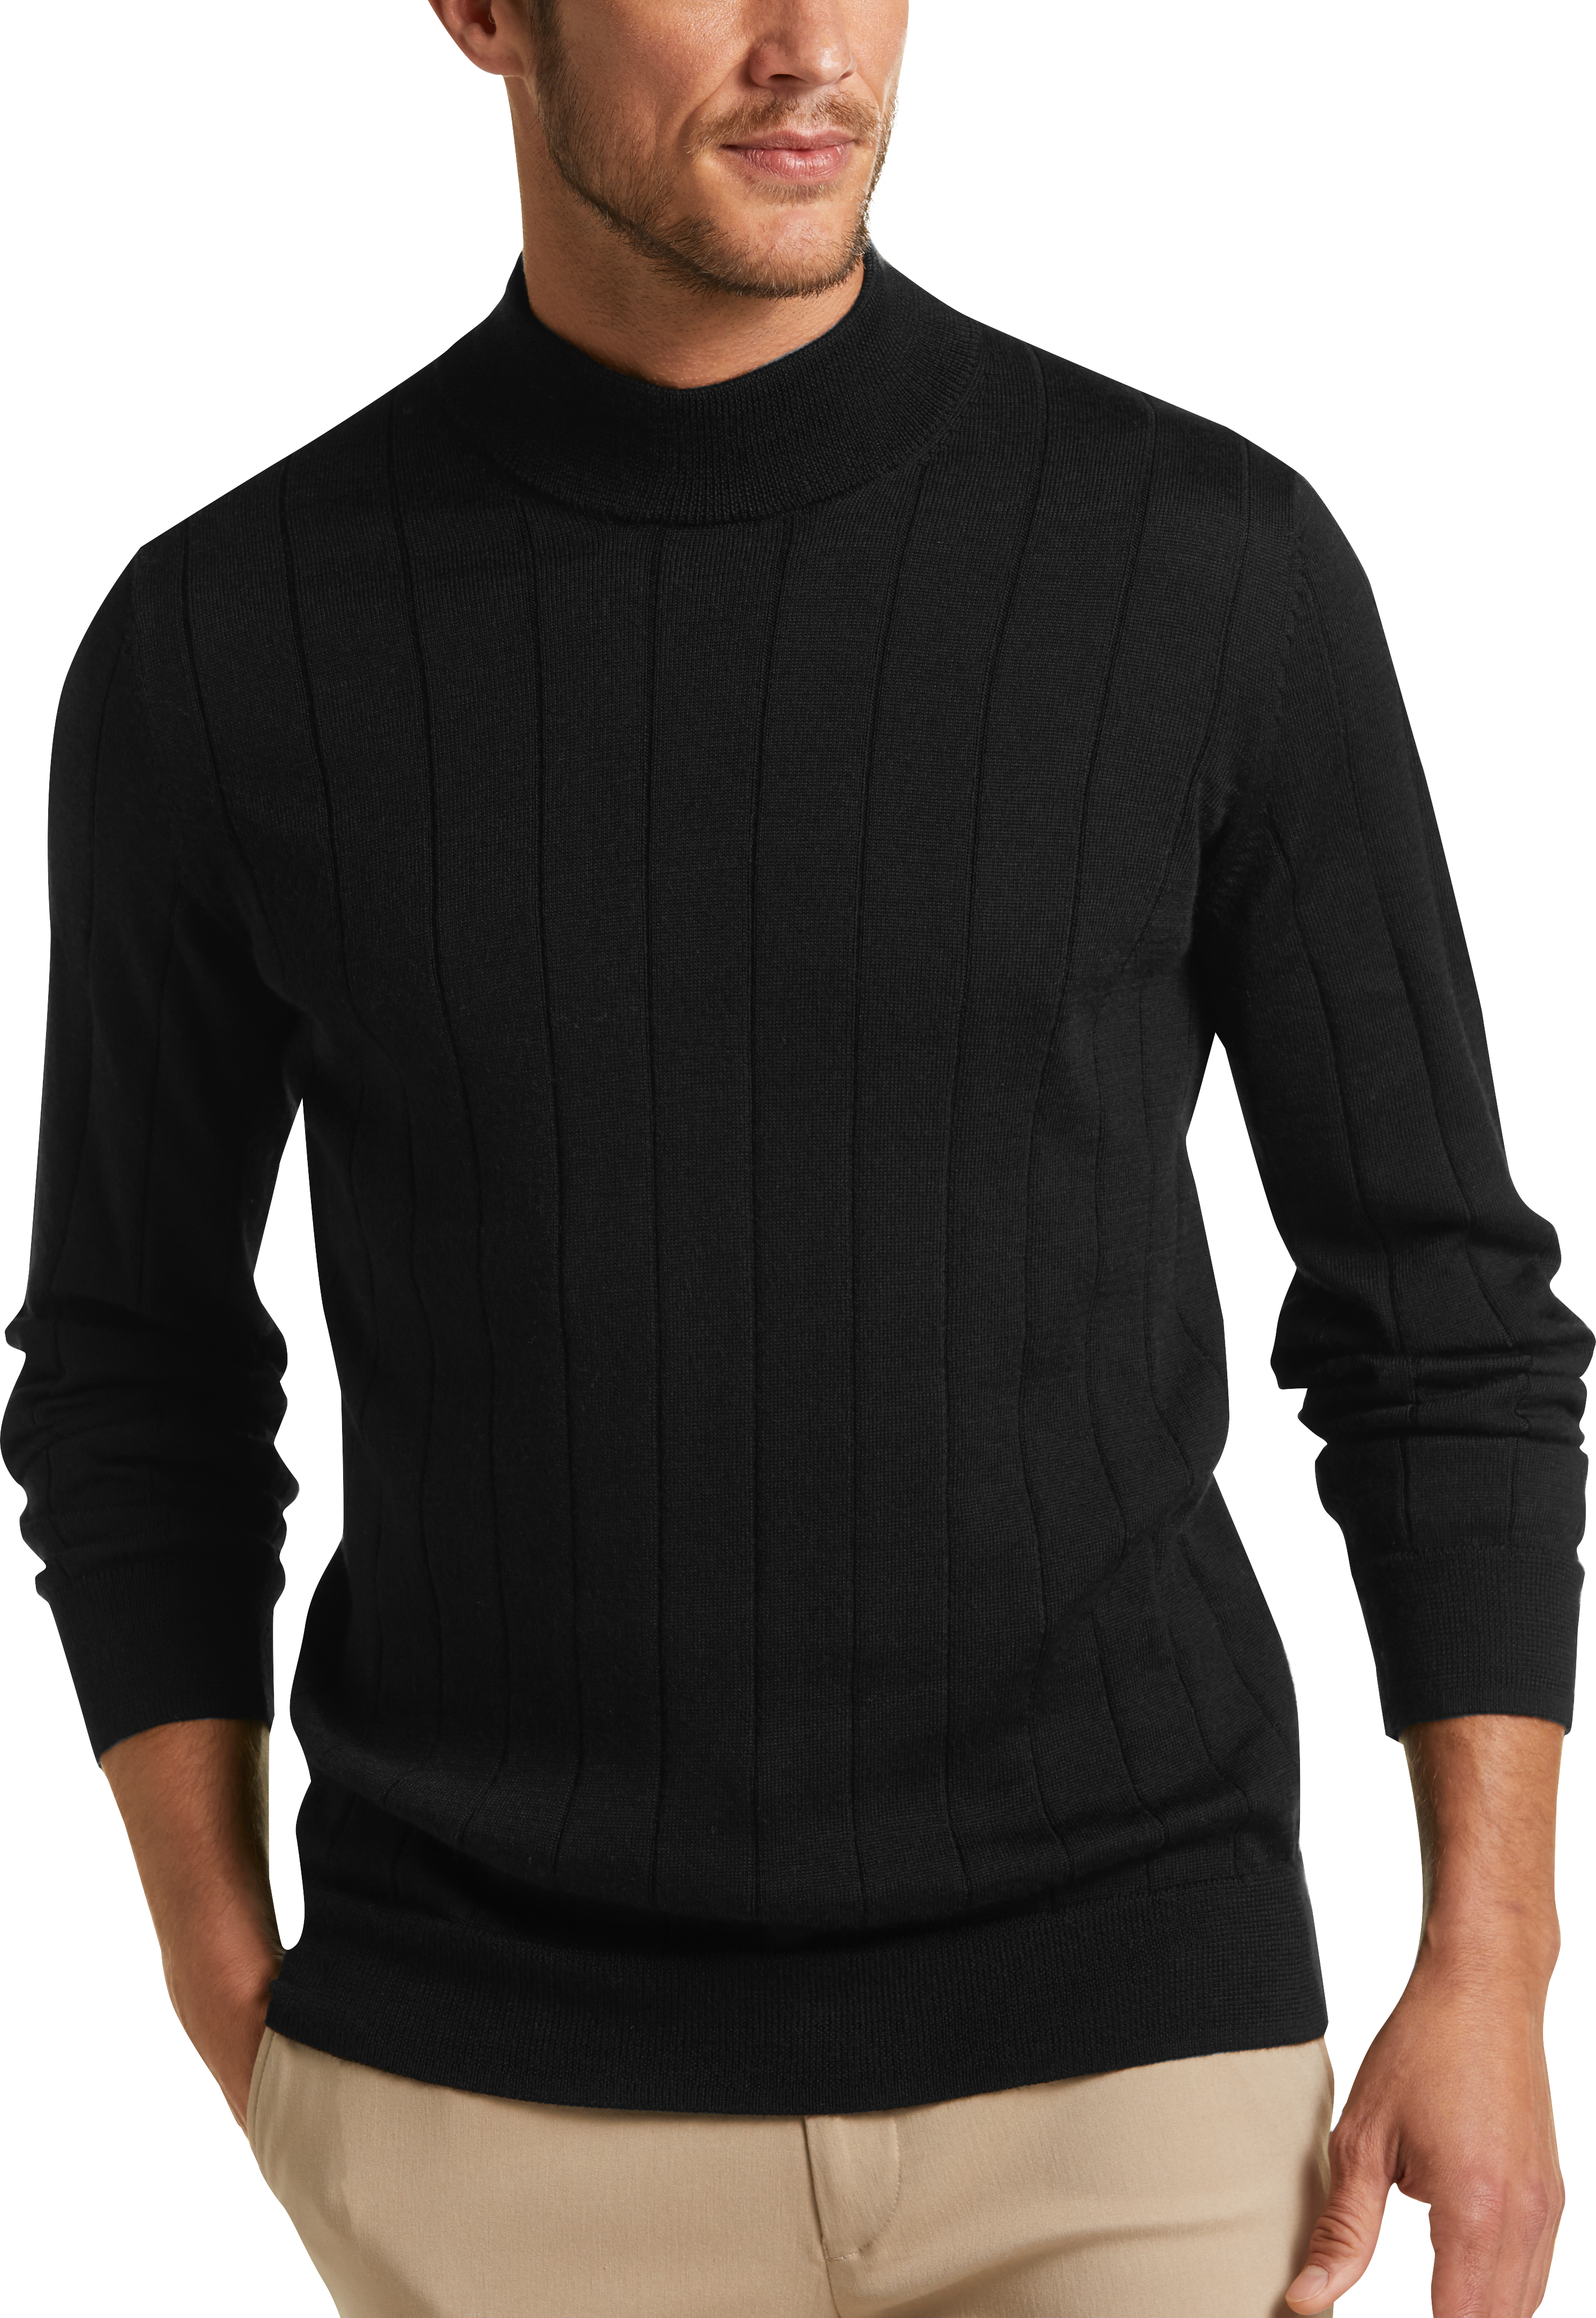 Joseph Abboud Berry Modern Fit 1/4 Zip Sweater - Men's Sweaters | Men's ...